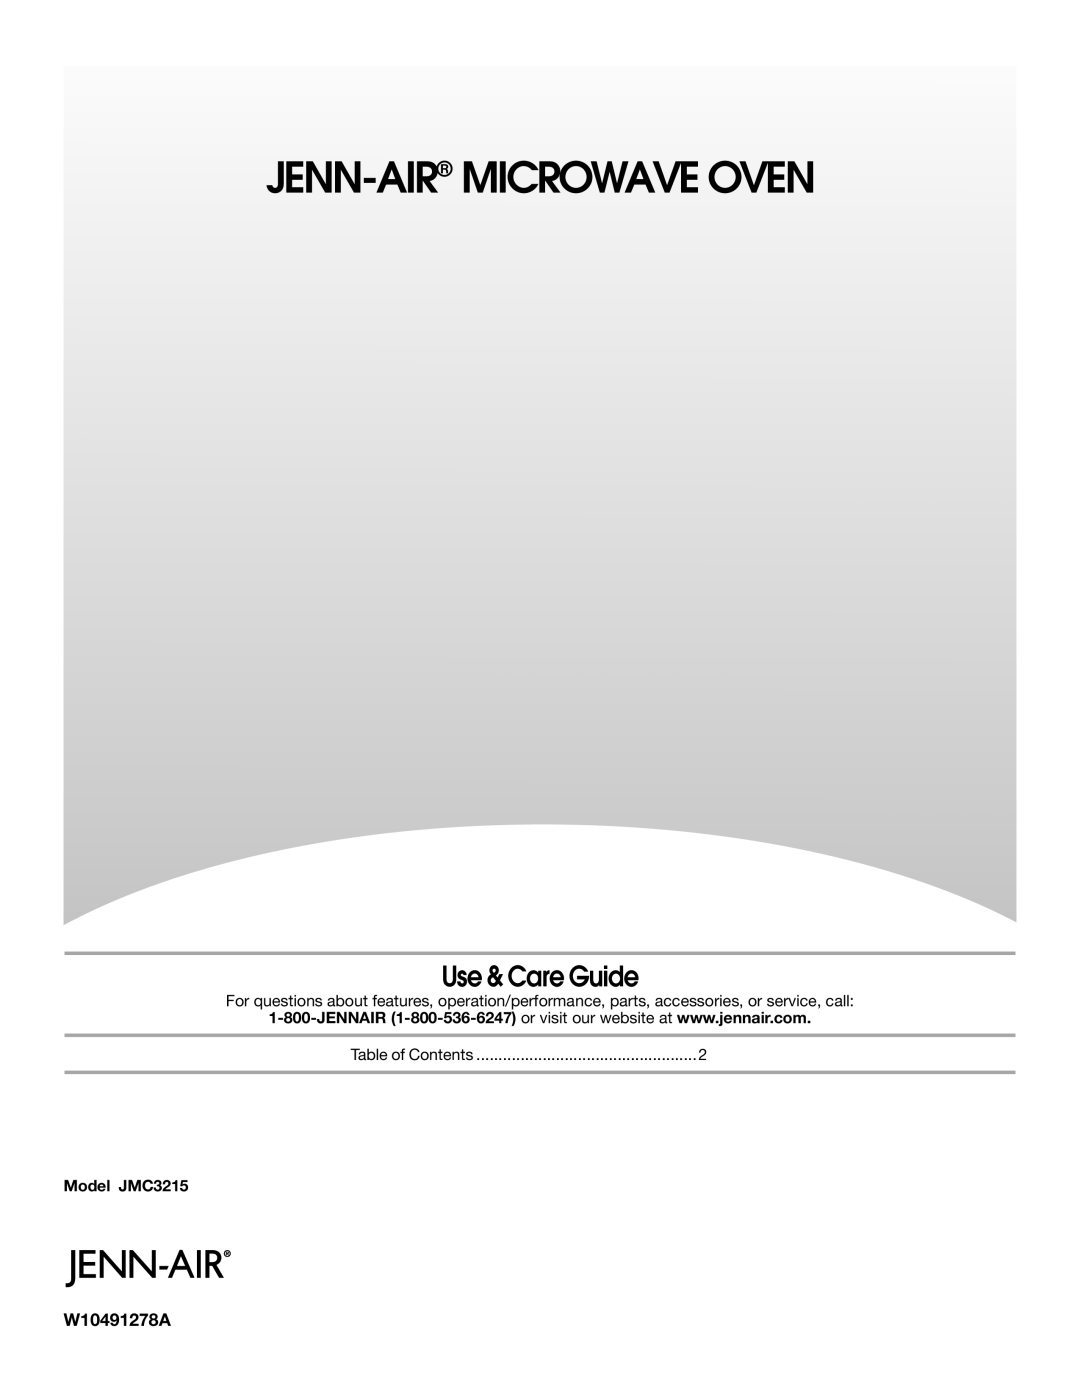 Jenn-Air W10491278A manual Model JMC3215, Jenn-Air Microwave Oven, Use & Care Guide 